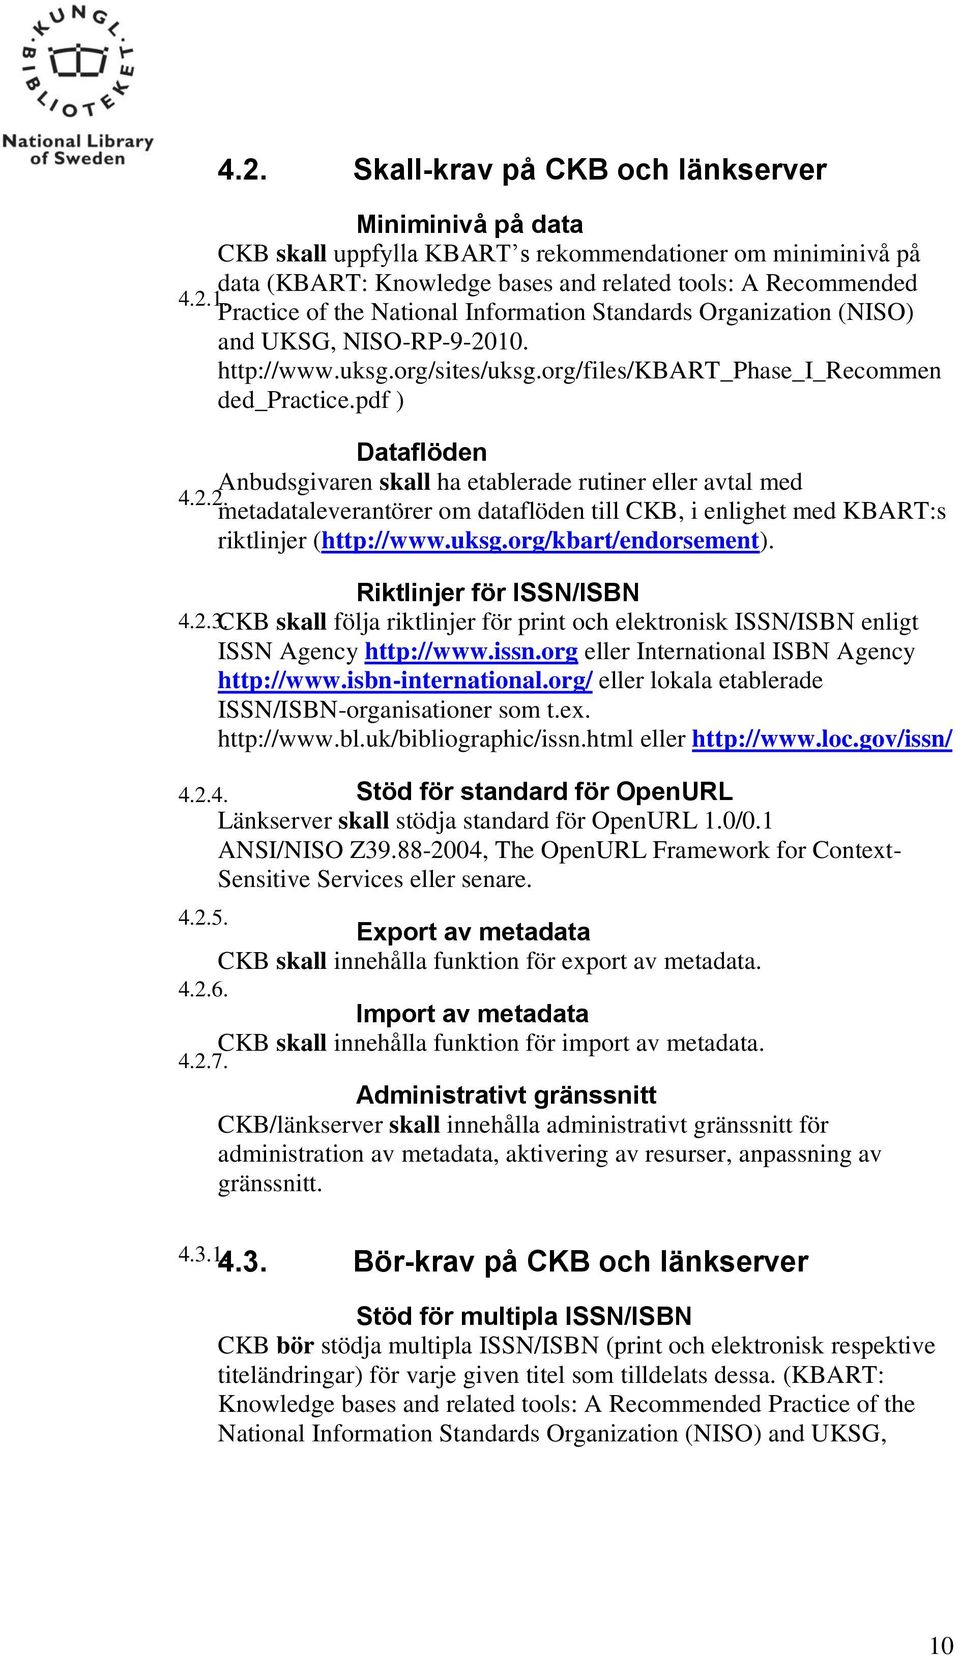 pdf ) Dataflöden Ạnbudsgivaren skall ha etablerade rutiner eller avtal med 4.2.2 metadataleverantörer om dataflöden till CKB, i enlighet med KBART:s riktlinjer (http://www.uksg.org/kbart/endorsement).